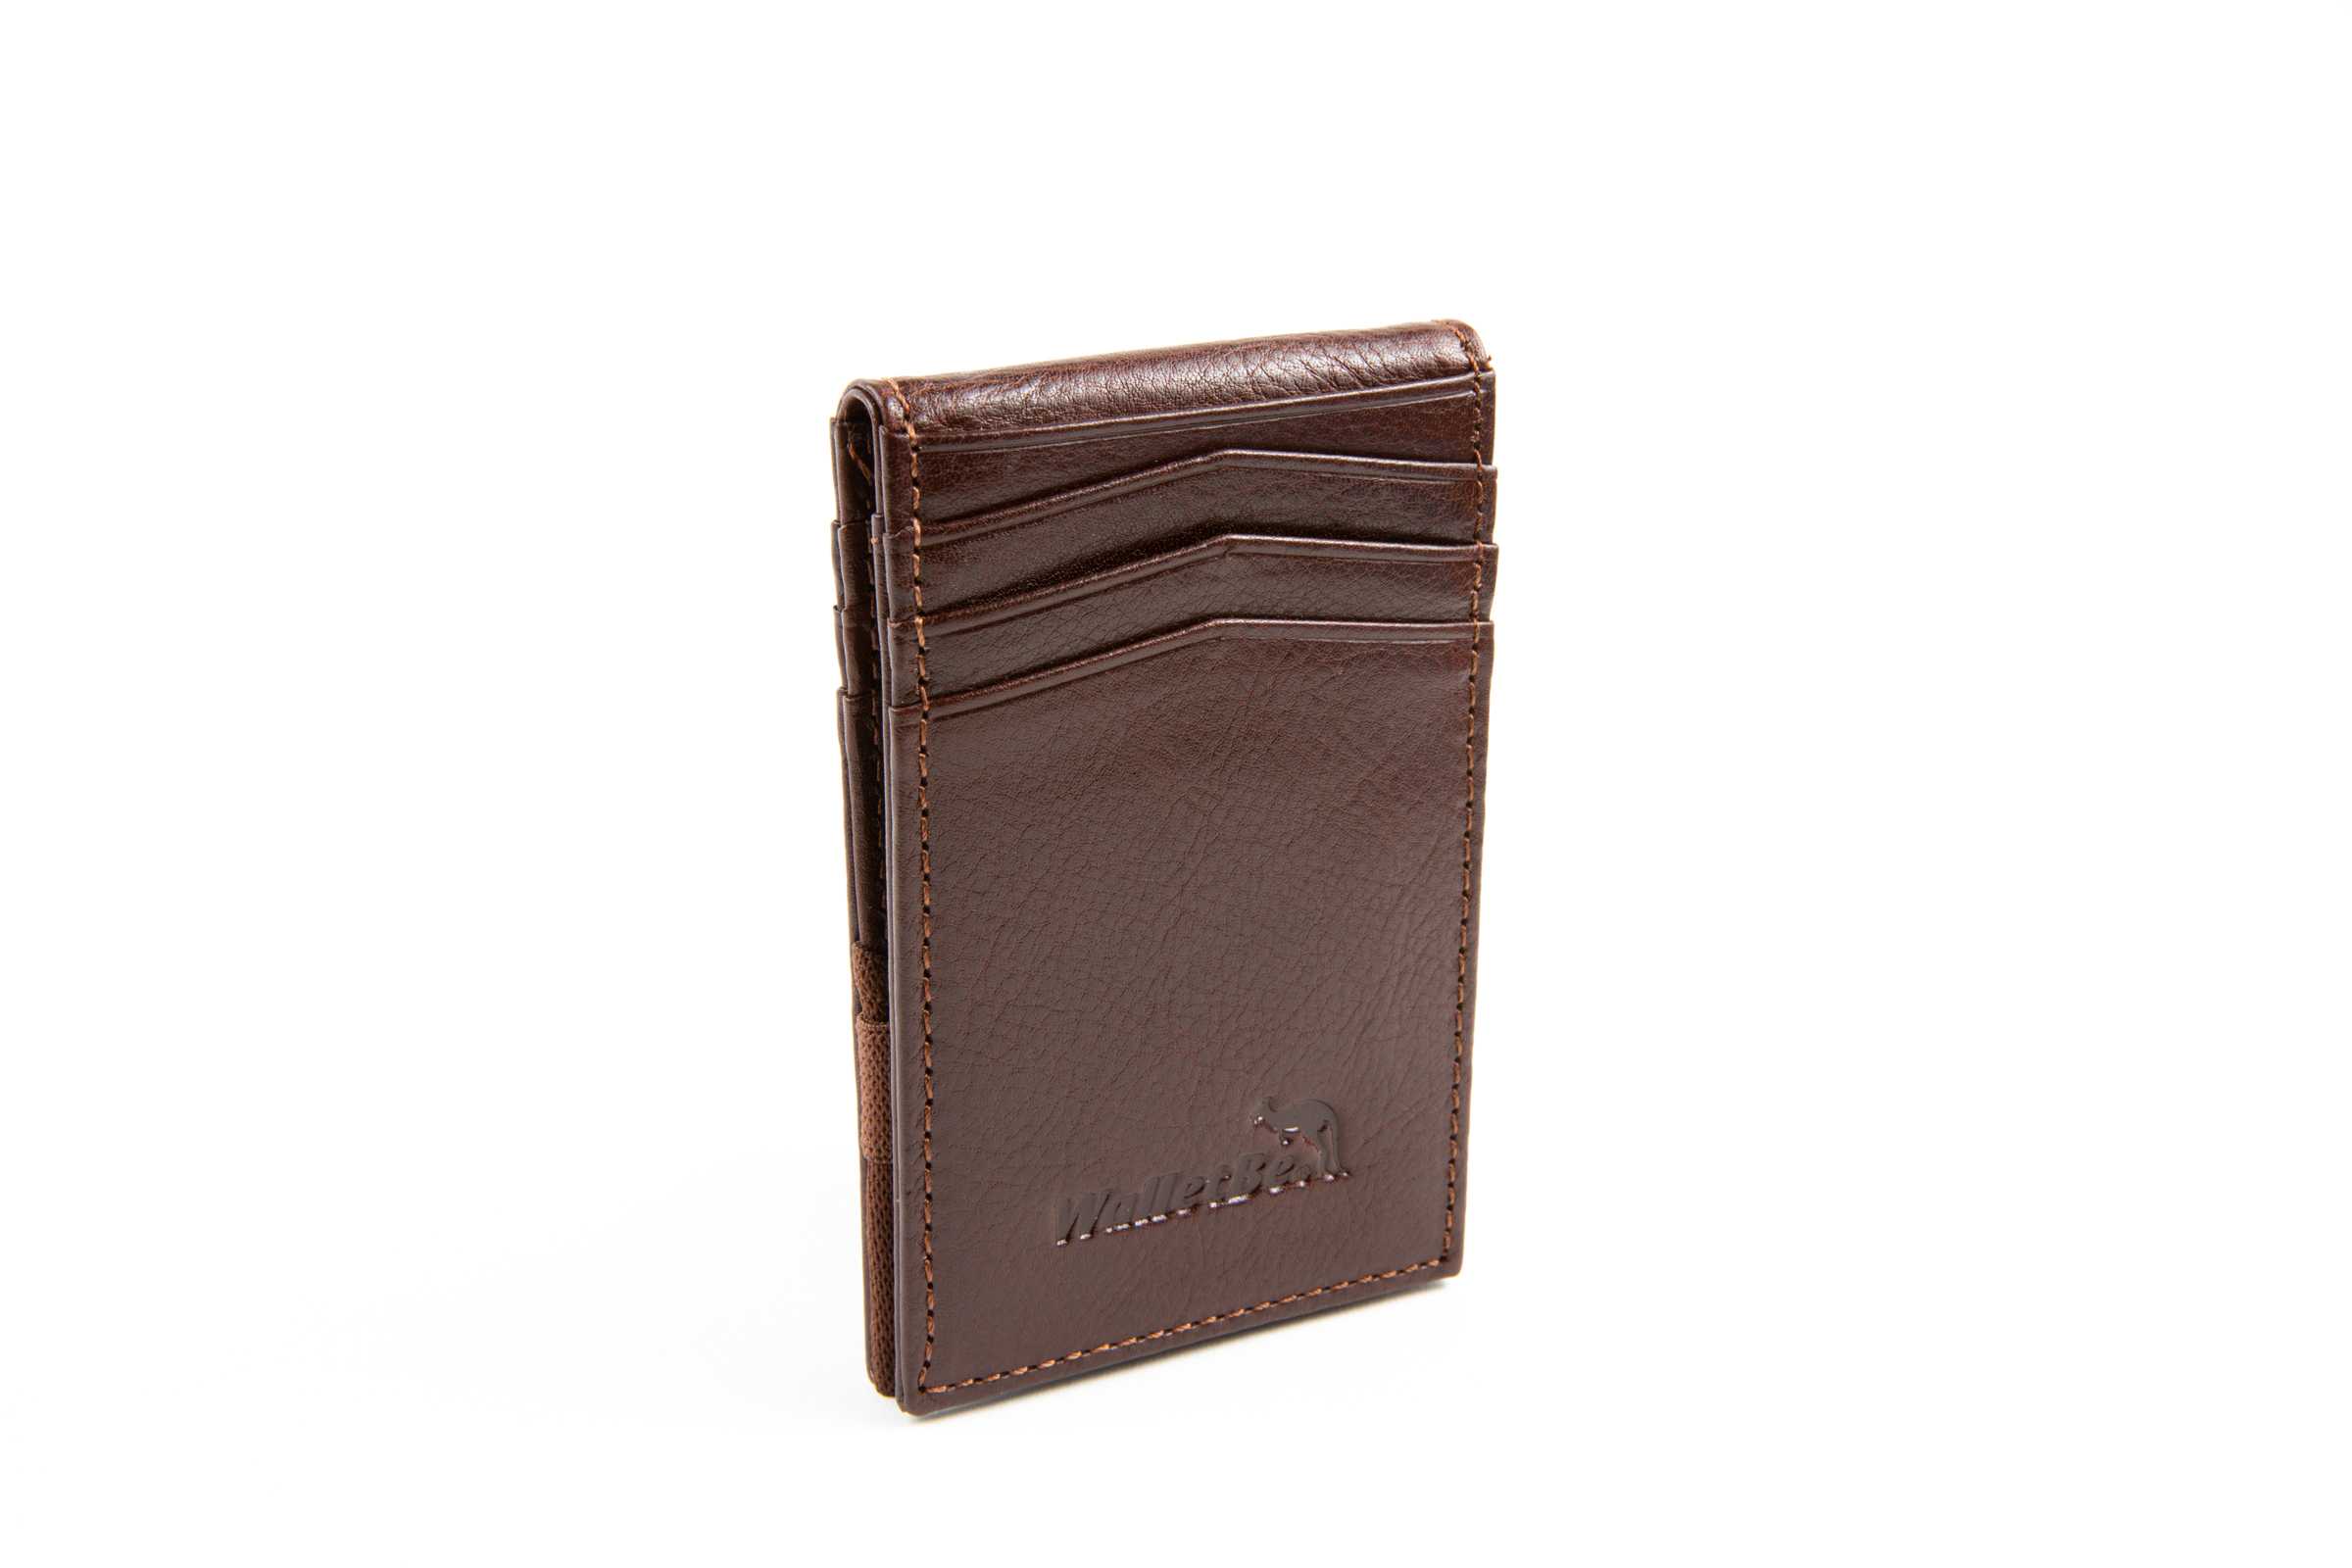 WalletBe Original Front Pocket RFID Leather Inner ID Wallet